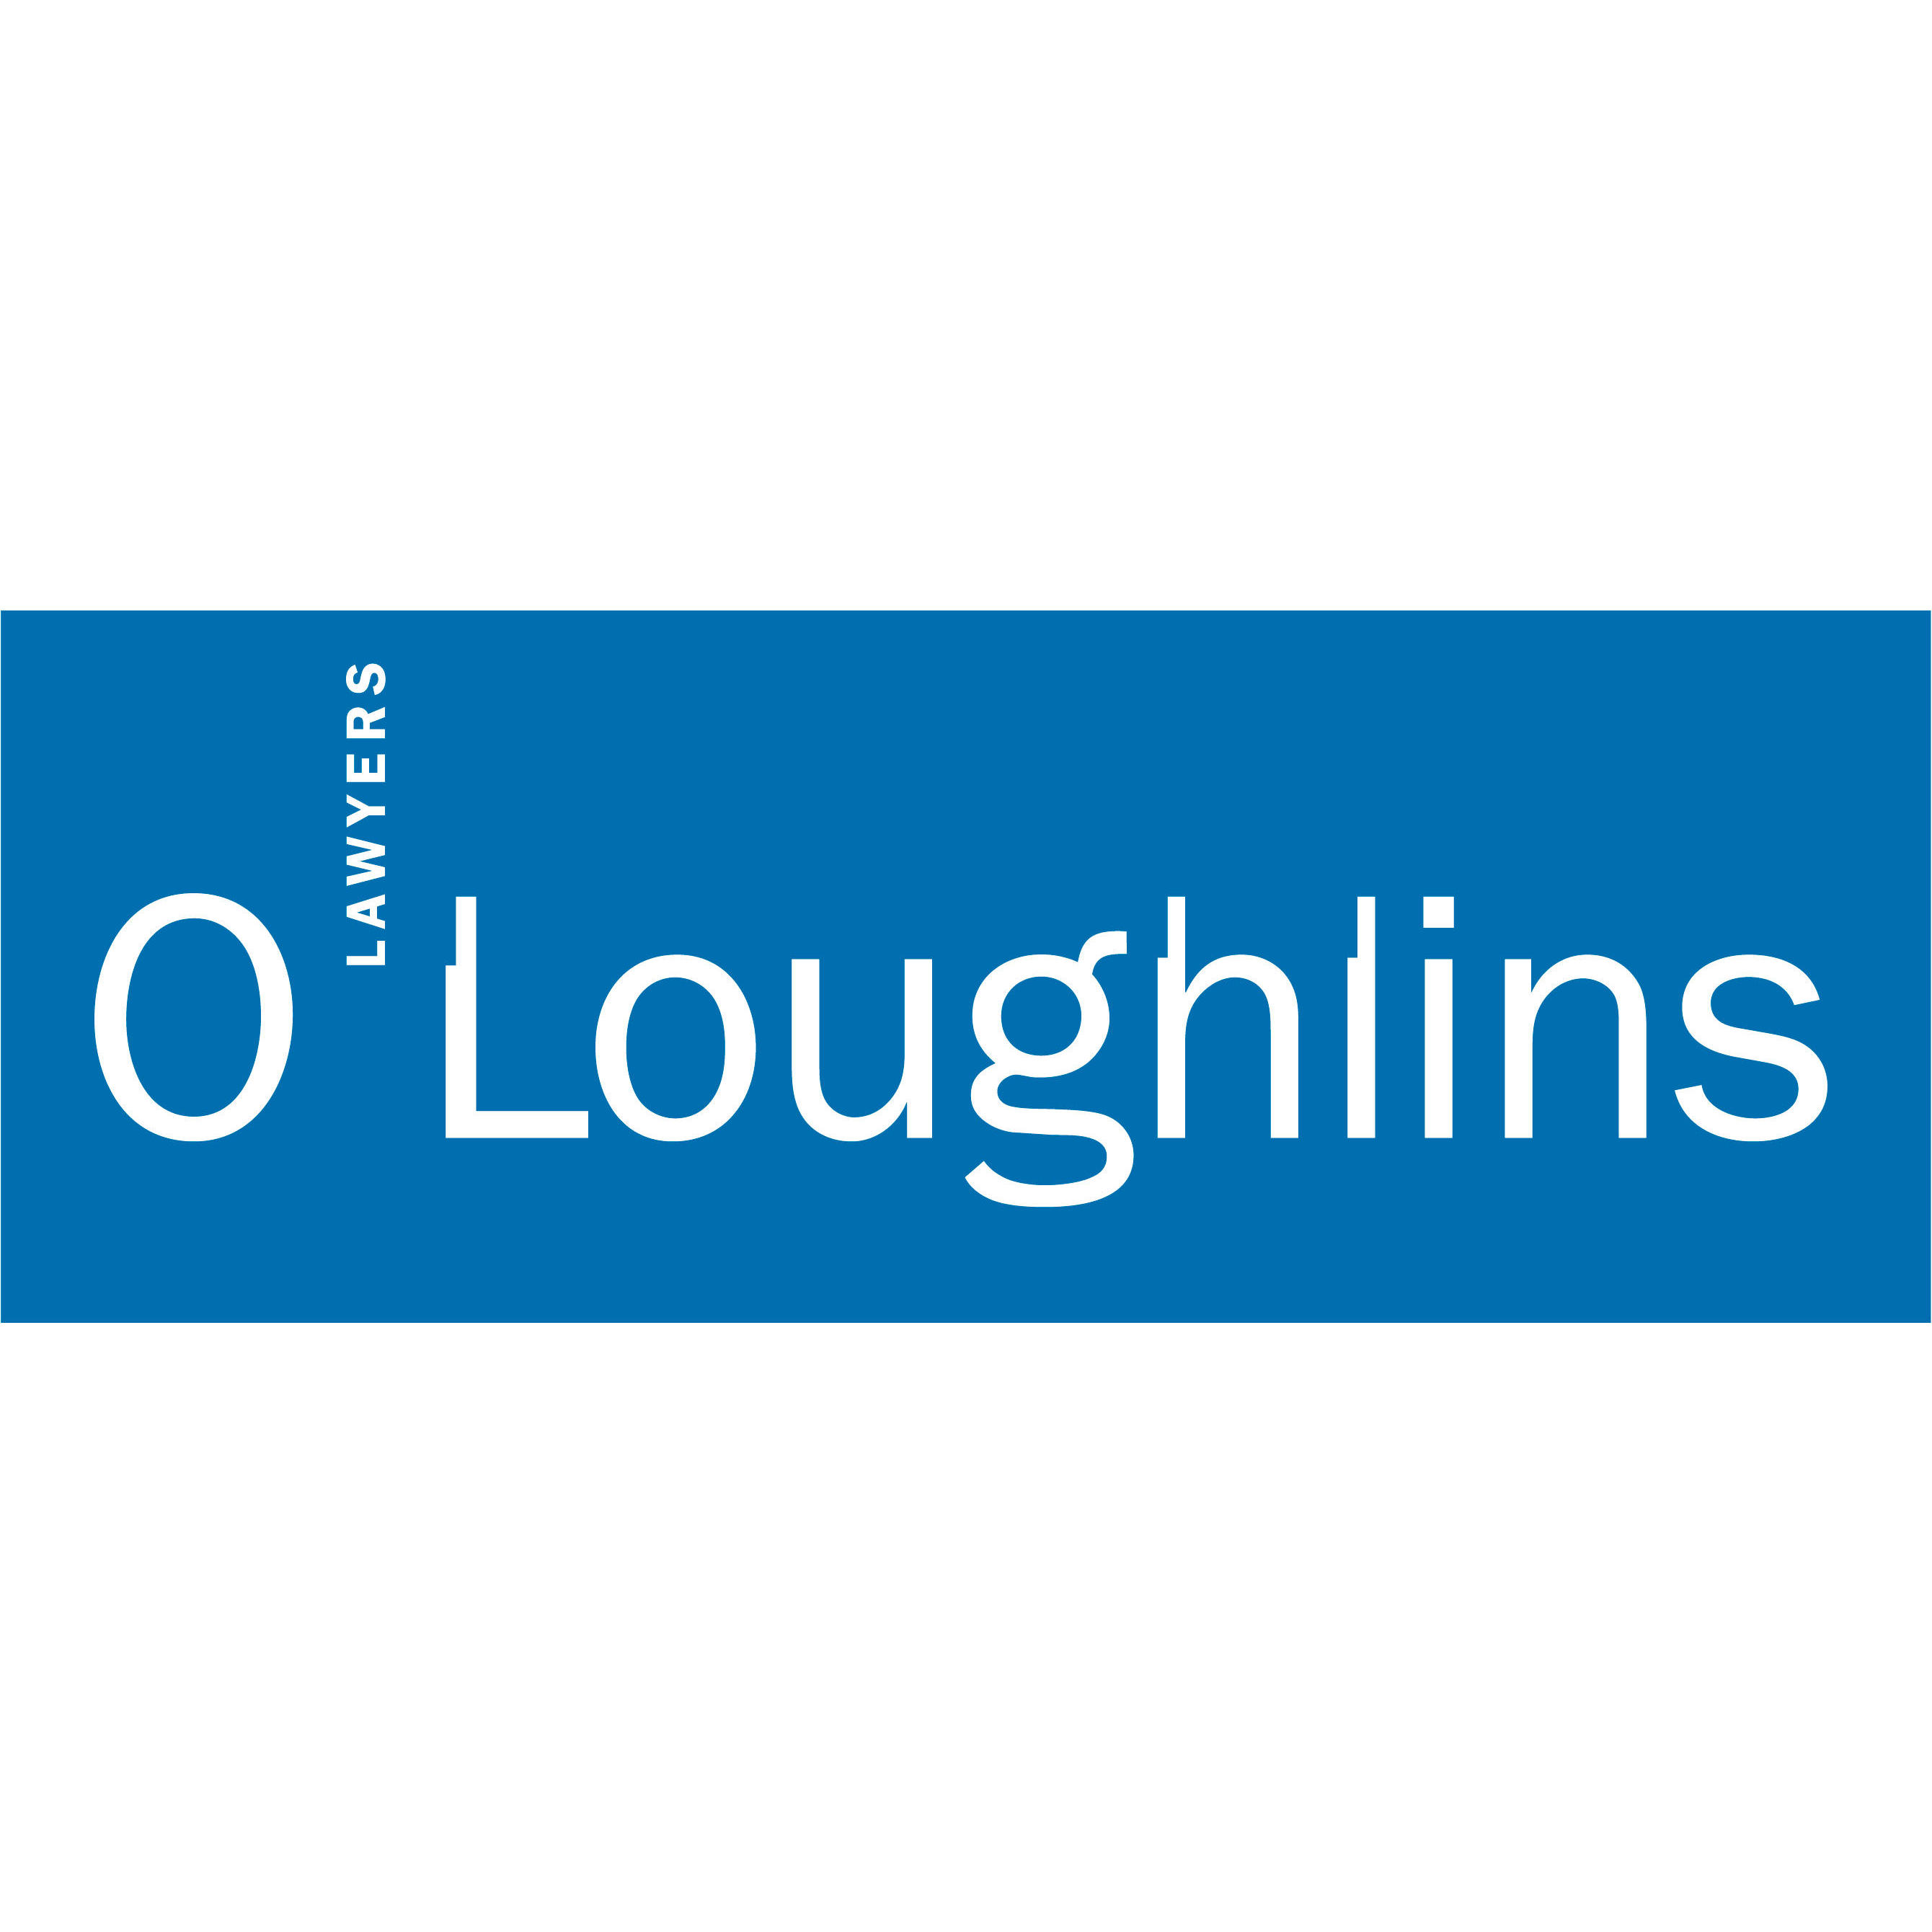 O'Loughlins Lawyers - Adelaide, SA 5000 - (08) 8111 4000 | ShowMeLocal.com